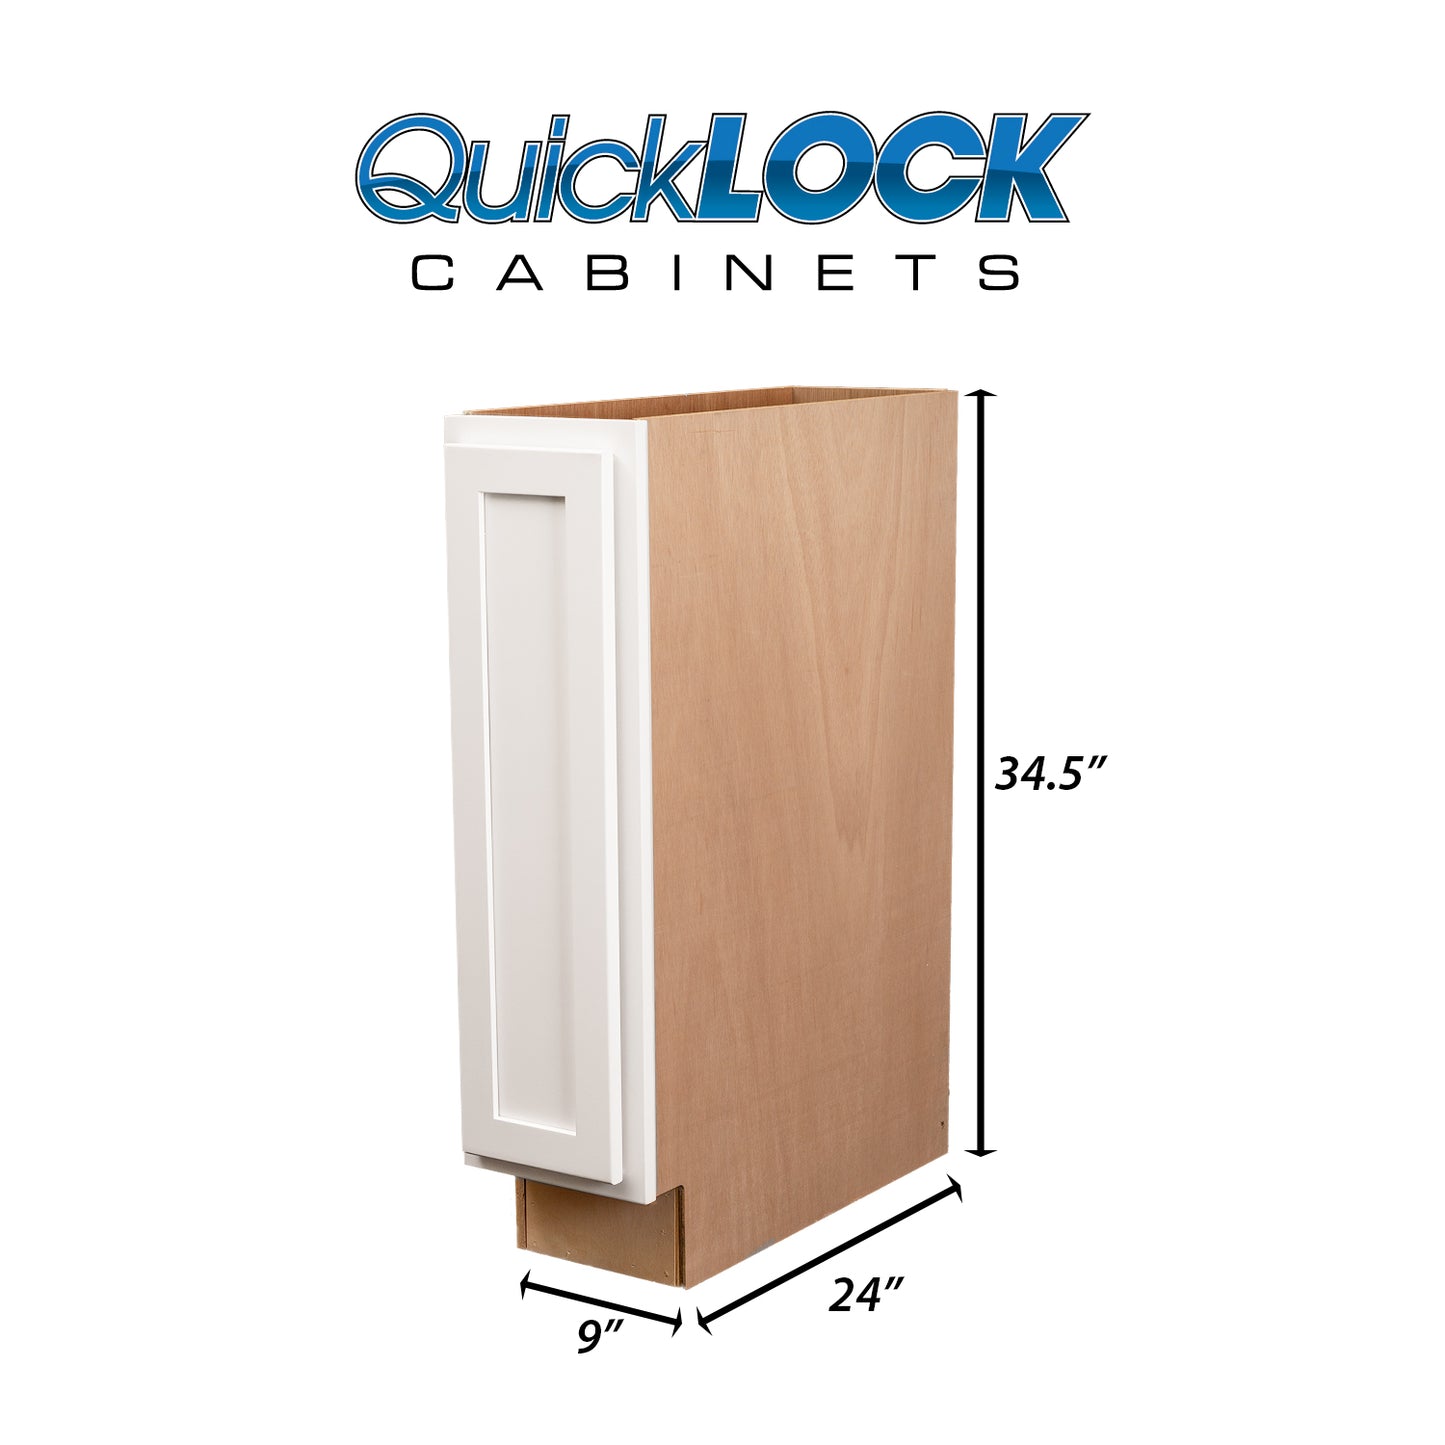 Quicklock RTA (Ready-to-Assemble) Pure White Base Cabinet | 9"Wx34.5"Hx24"D